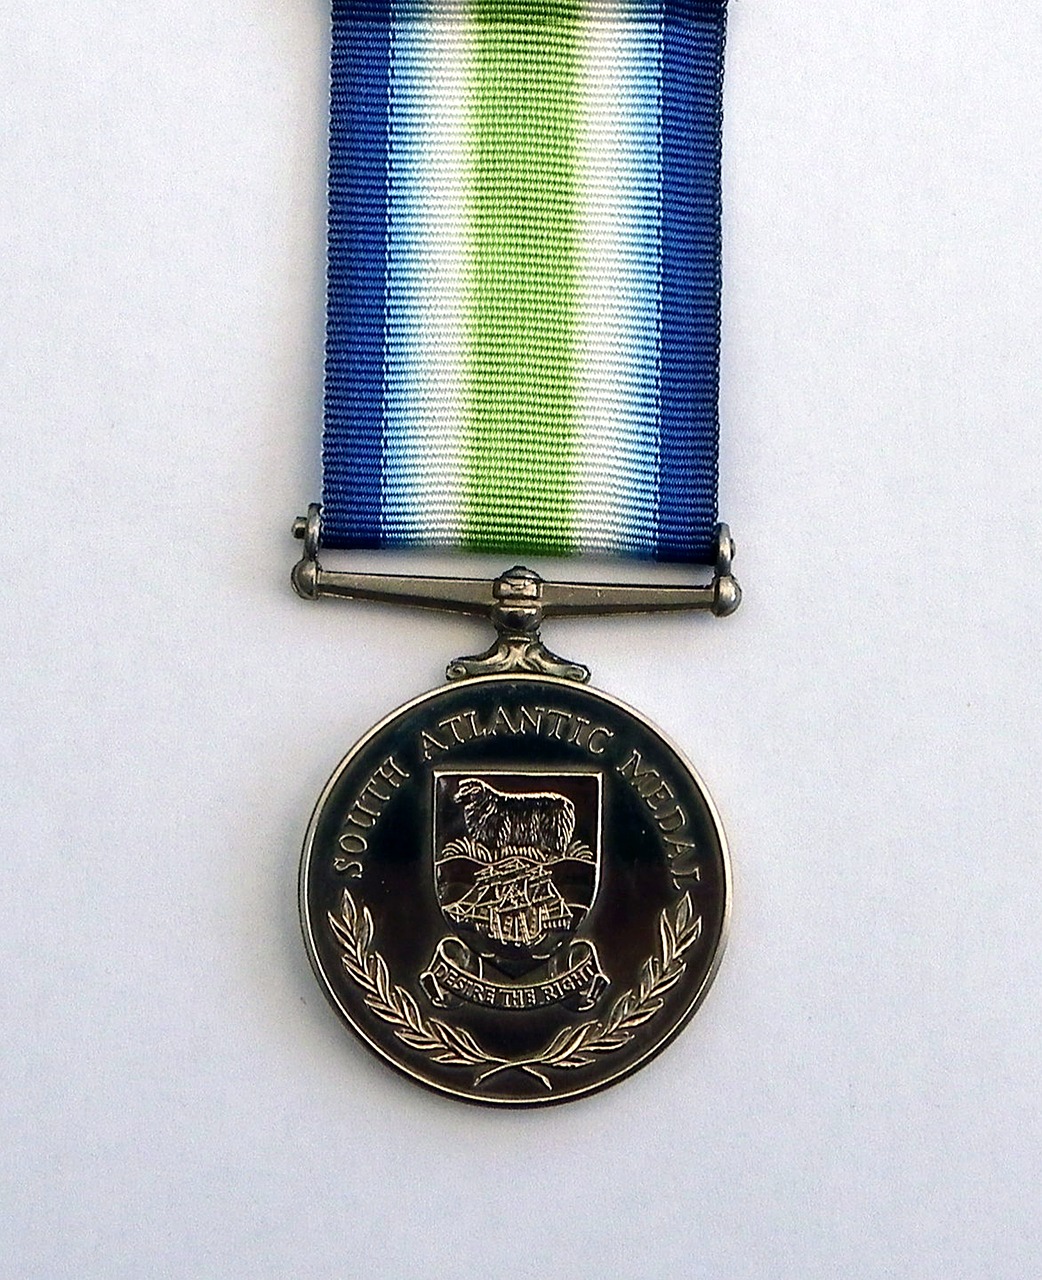 south atlantic medal free photo